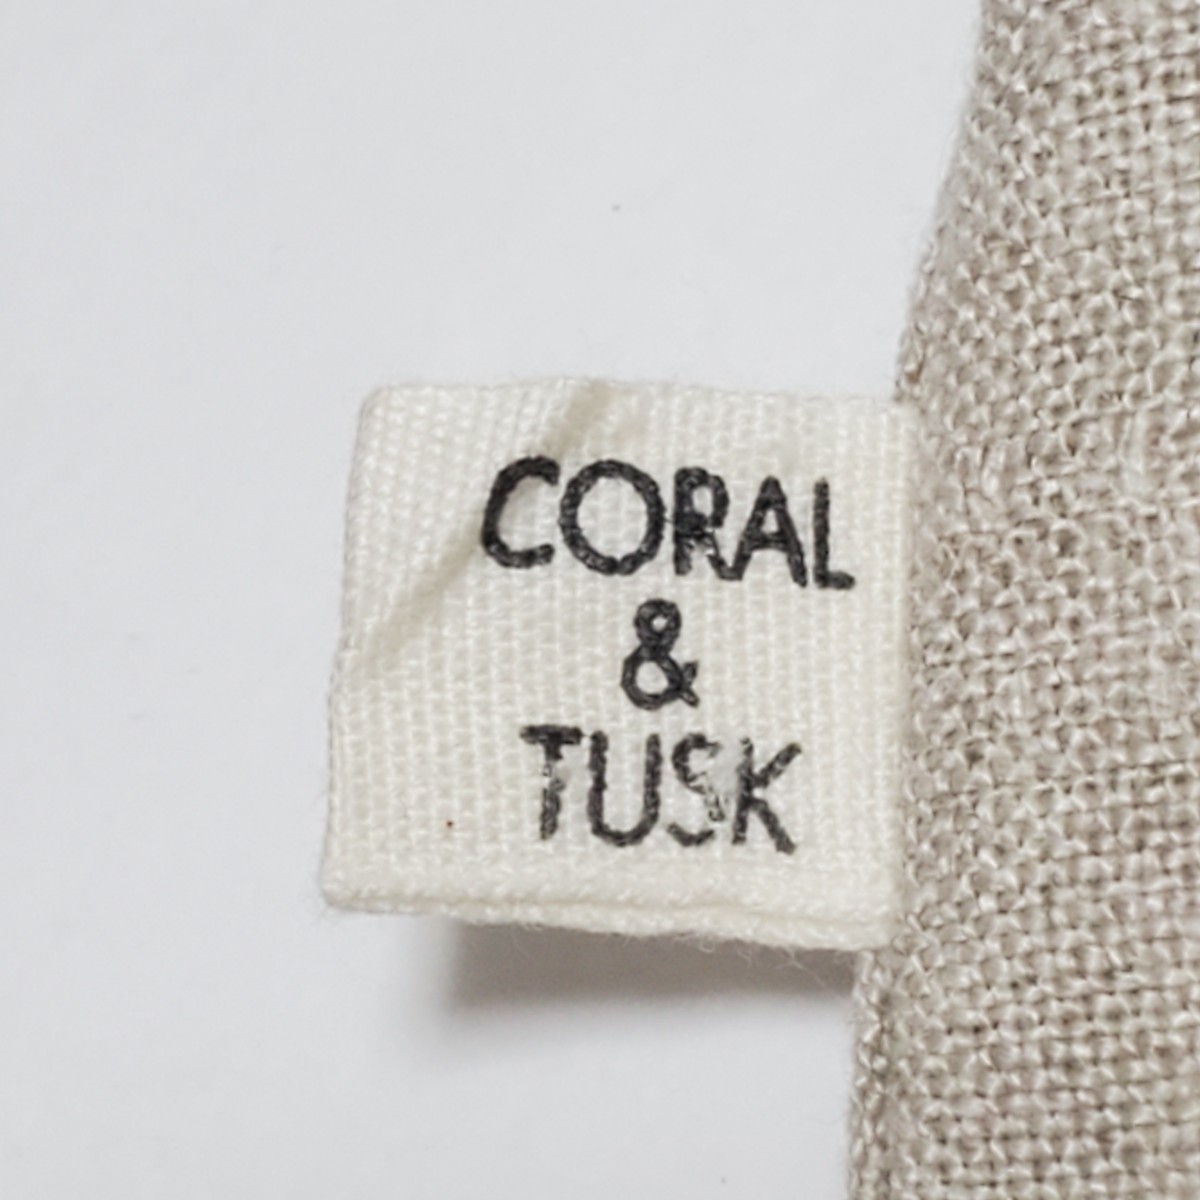 Coral & Tusk coral and task Coaster bear Santa Claus bear embroidery linen